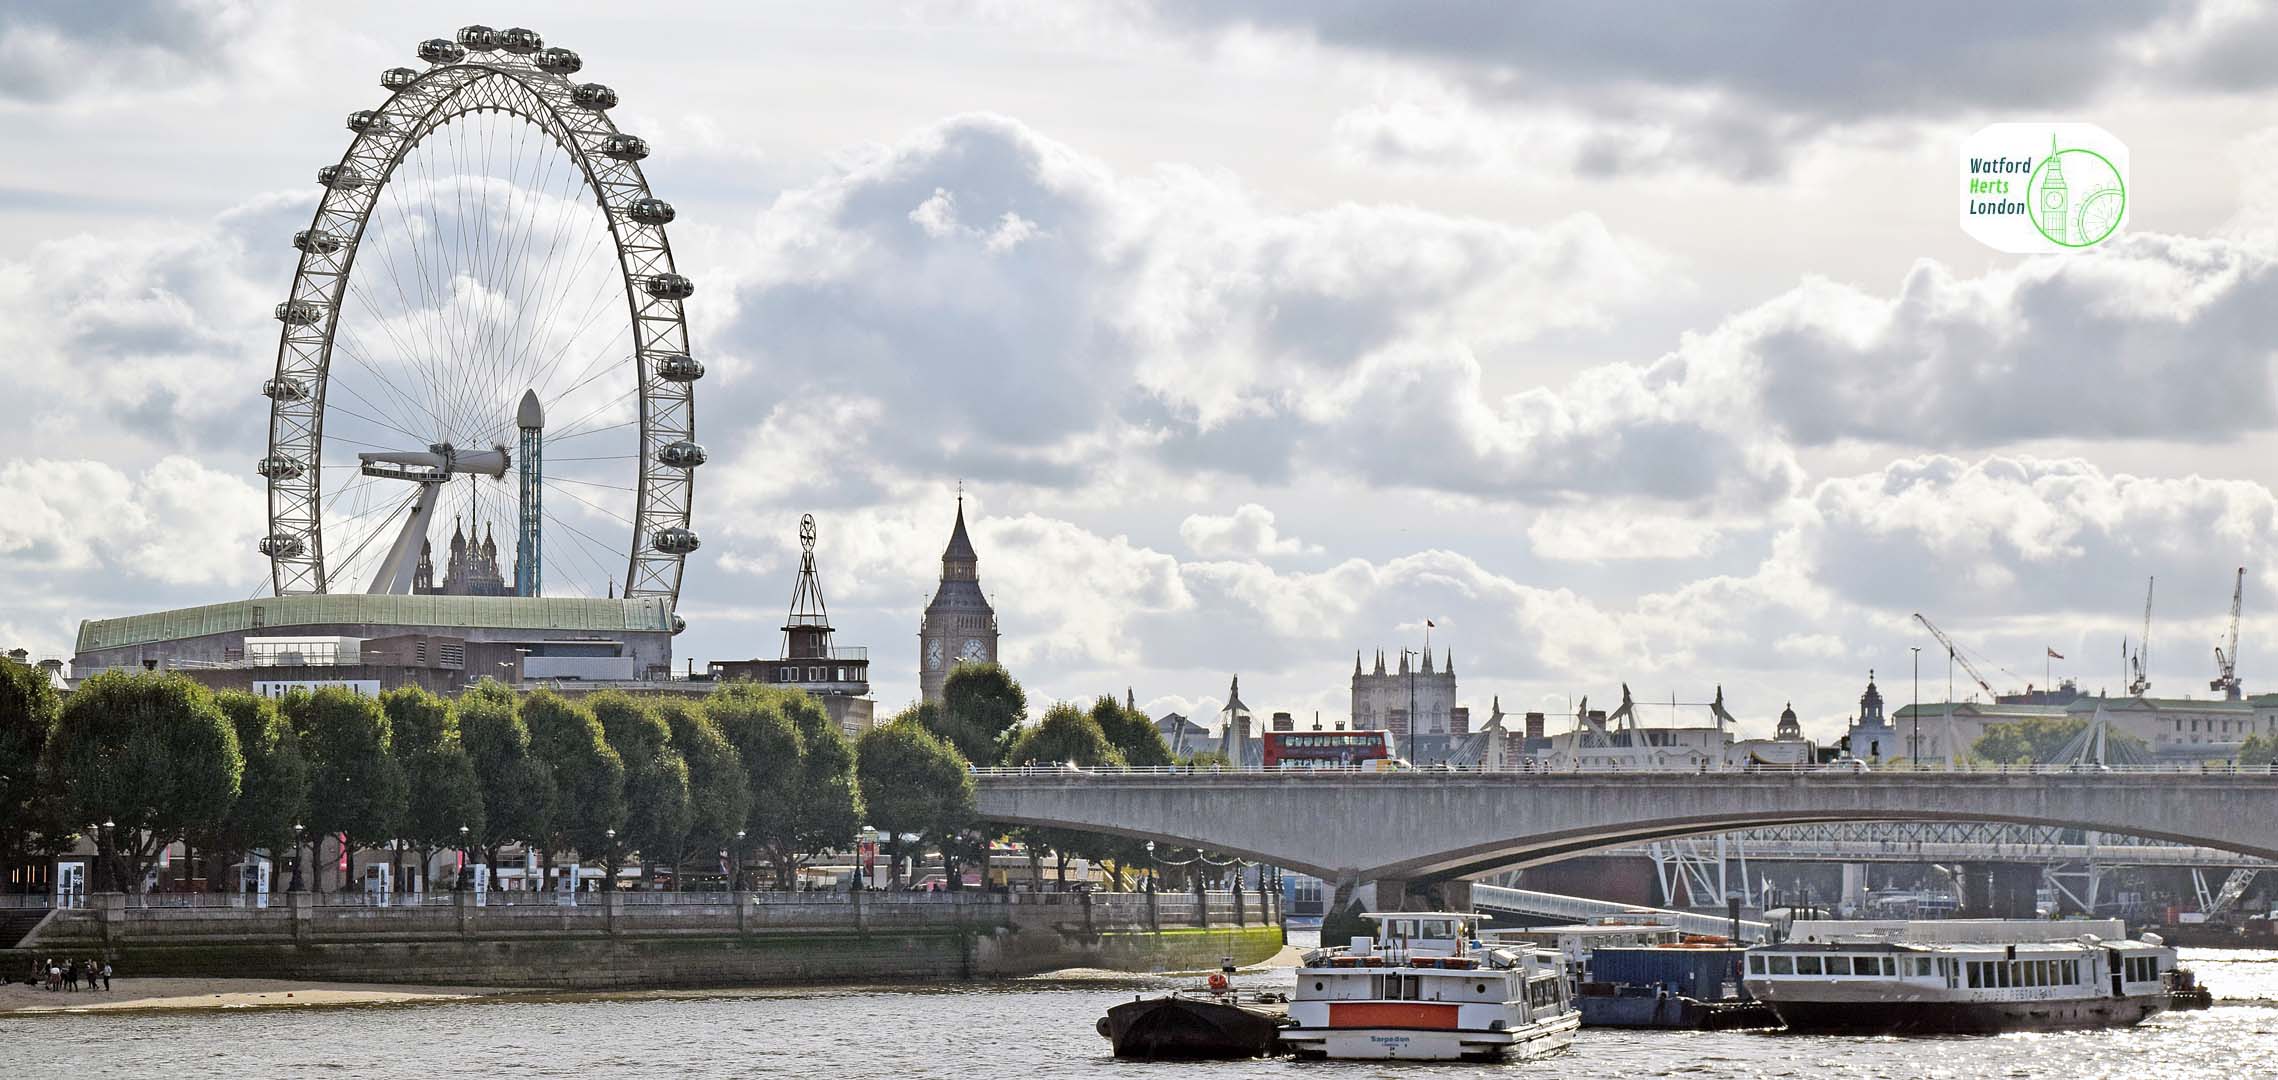 The Coca-Cola London Eye and Big Ben